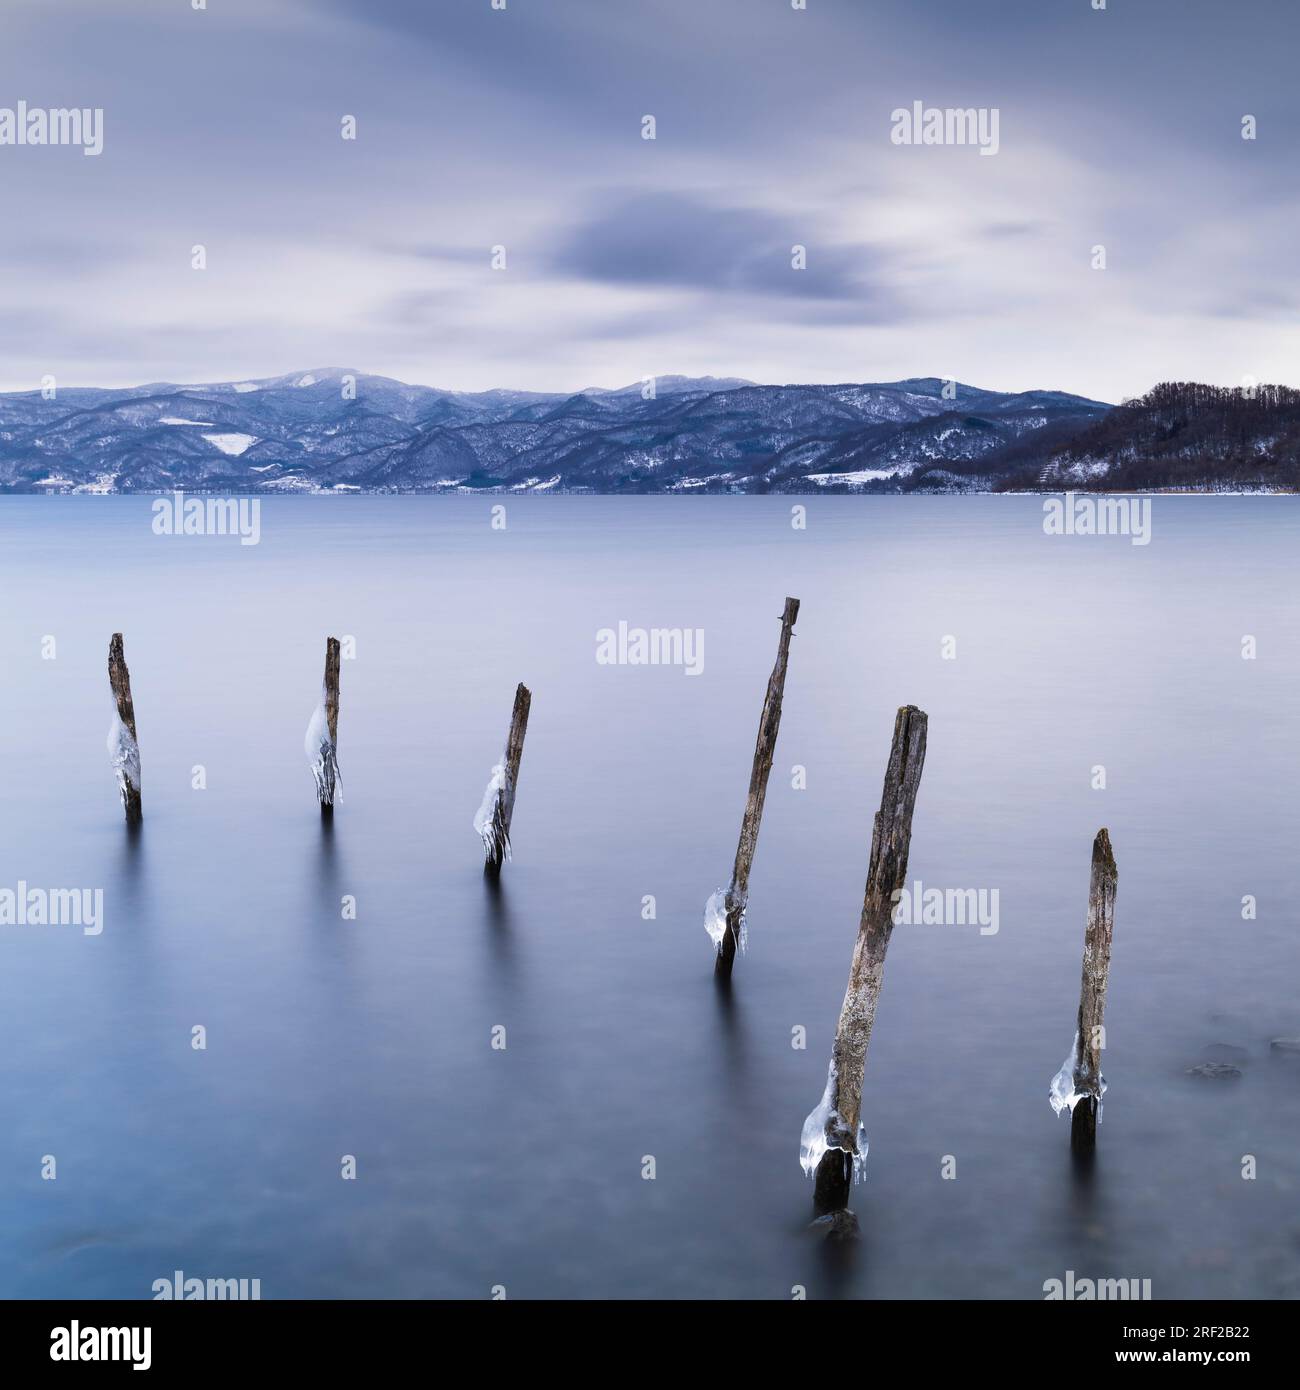 Long exposure shot of wooden sticks in the water at lake Toya, Hokkaido, Japan Stock Photo